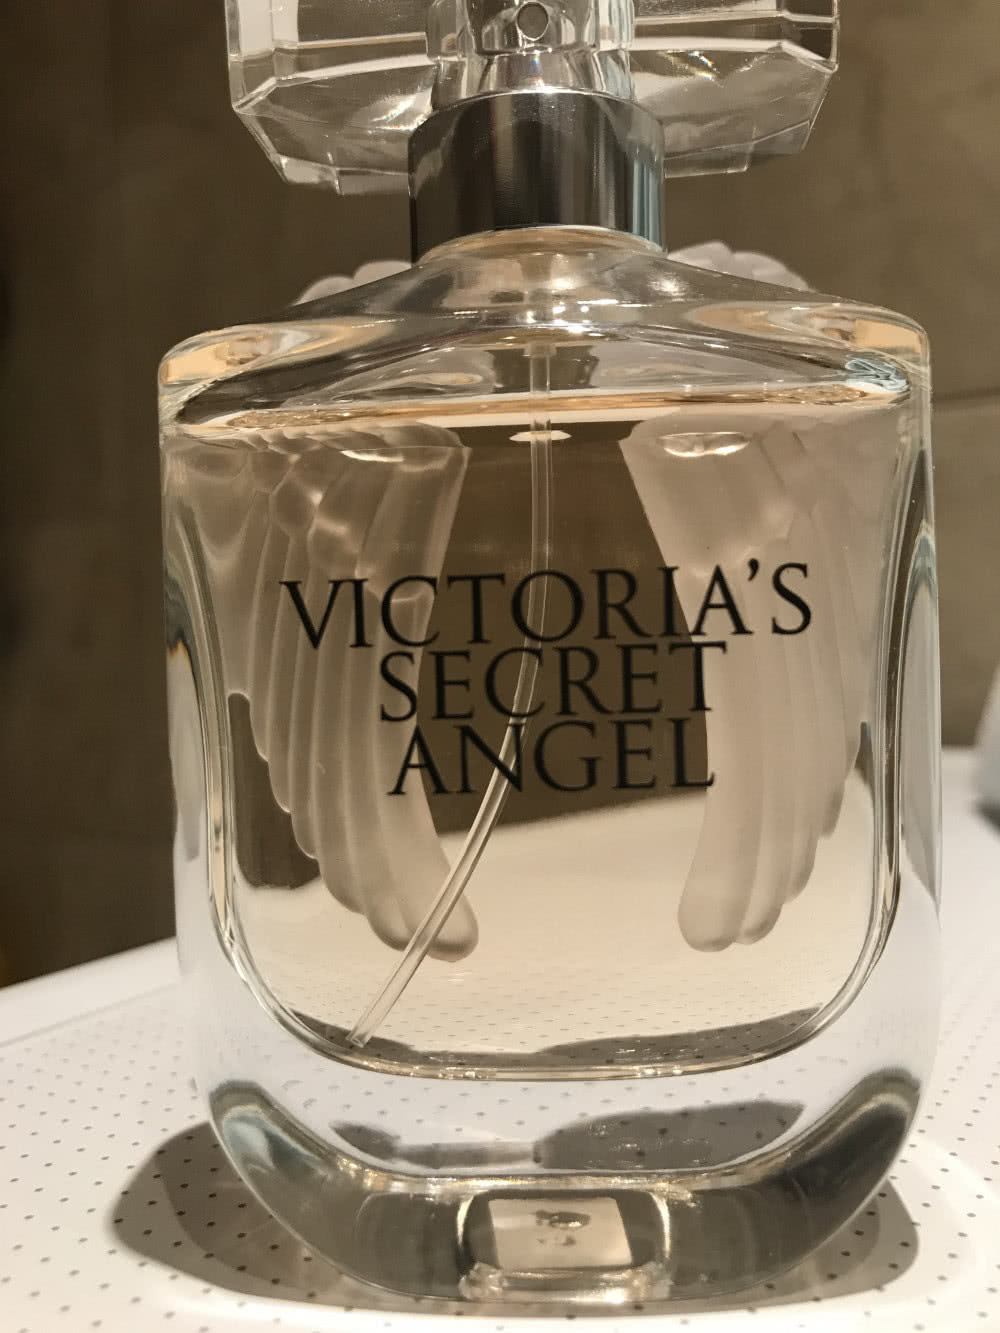 Victoria’s Secret Angel Victoria's Secret 50 ml